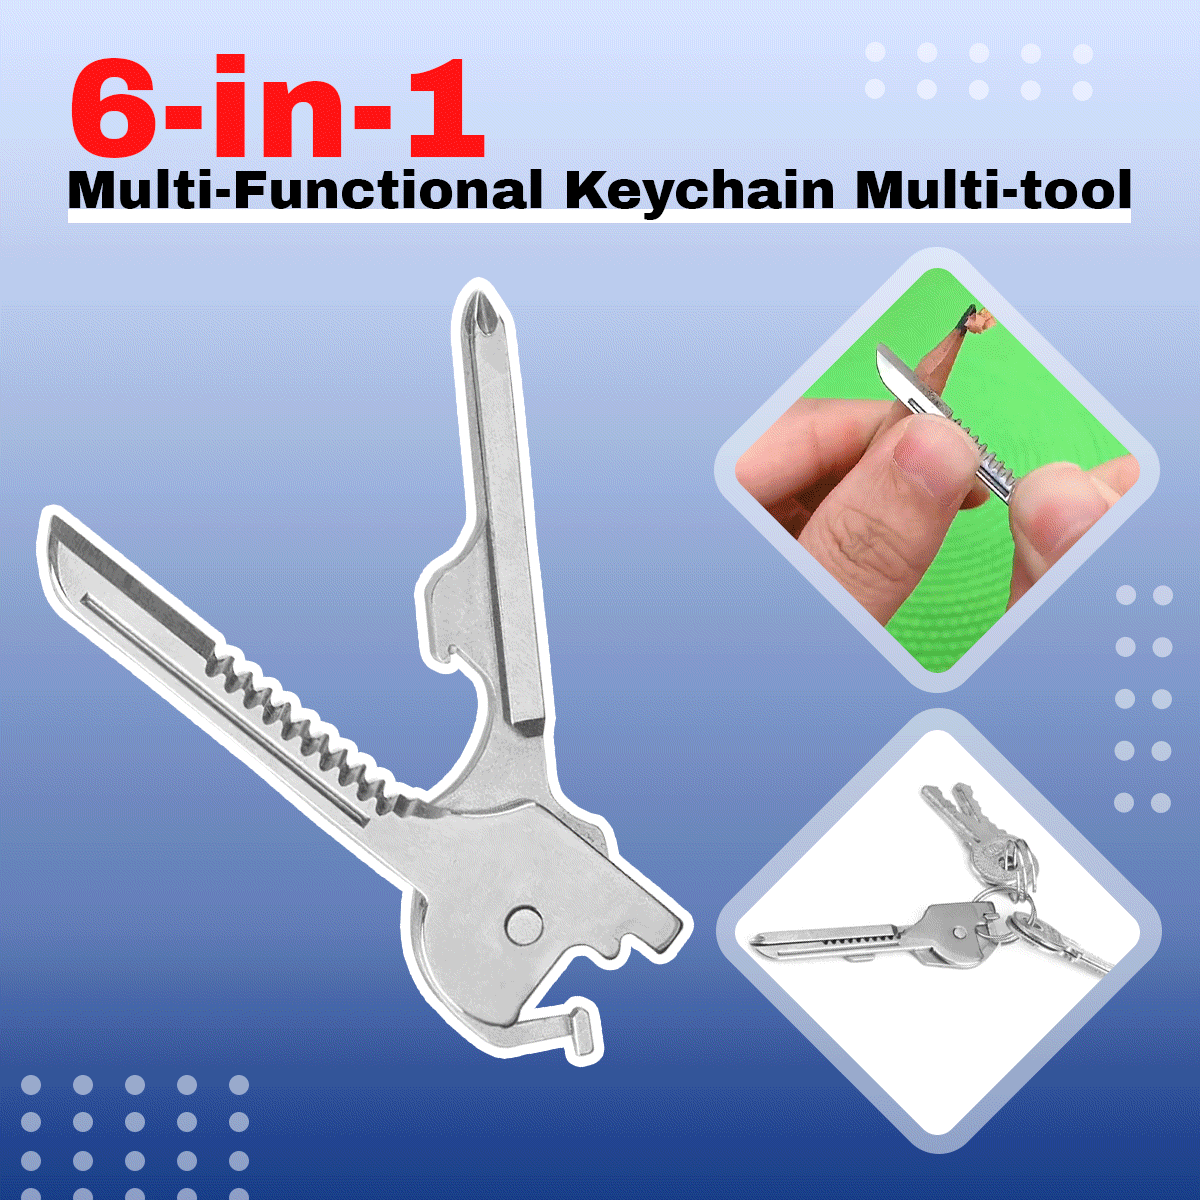 6-in-1 Multi-Functional Keychain Multi-tool